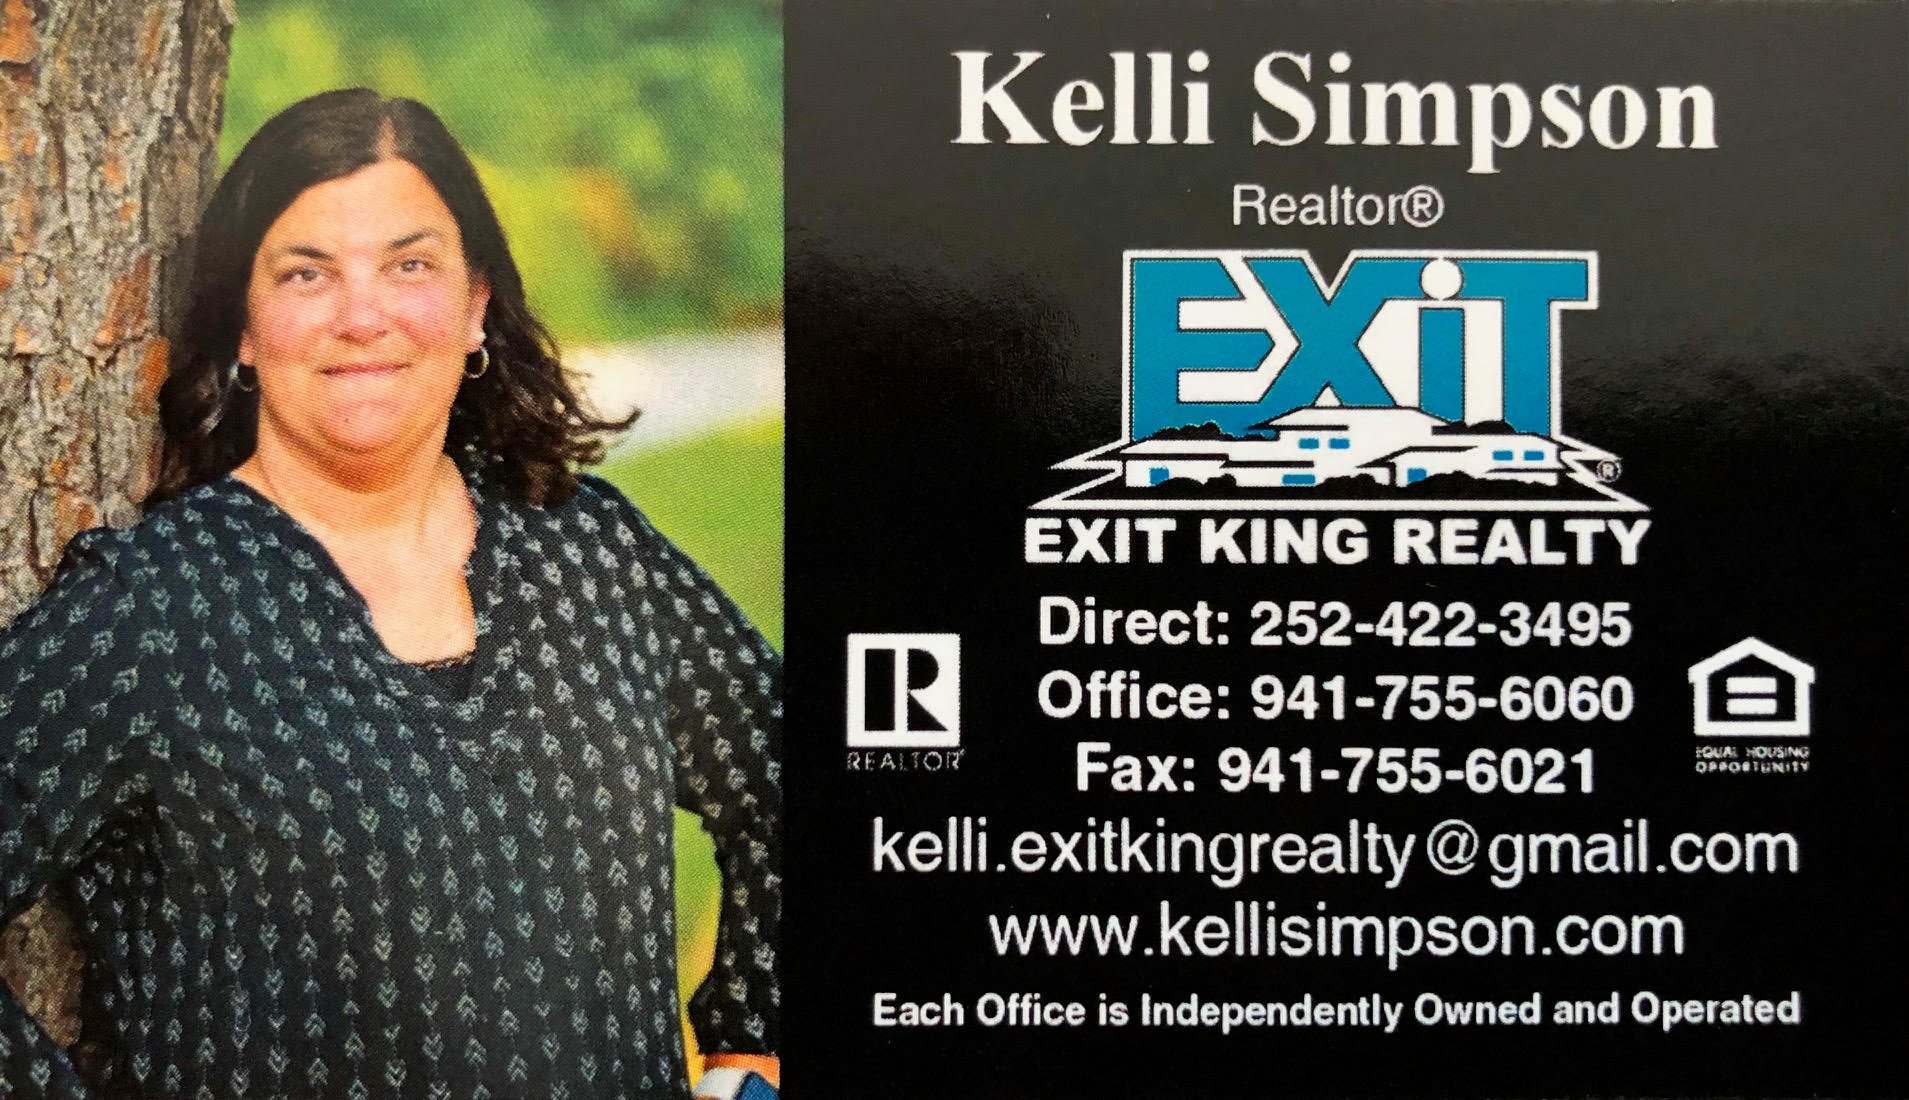 Exit King Realty - Kelli Simpson